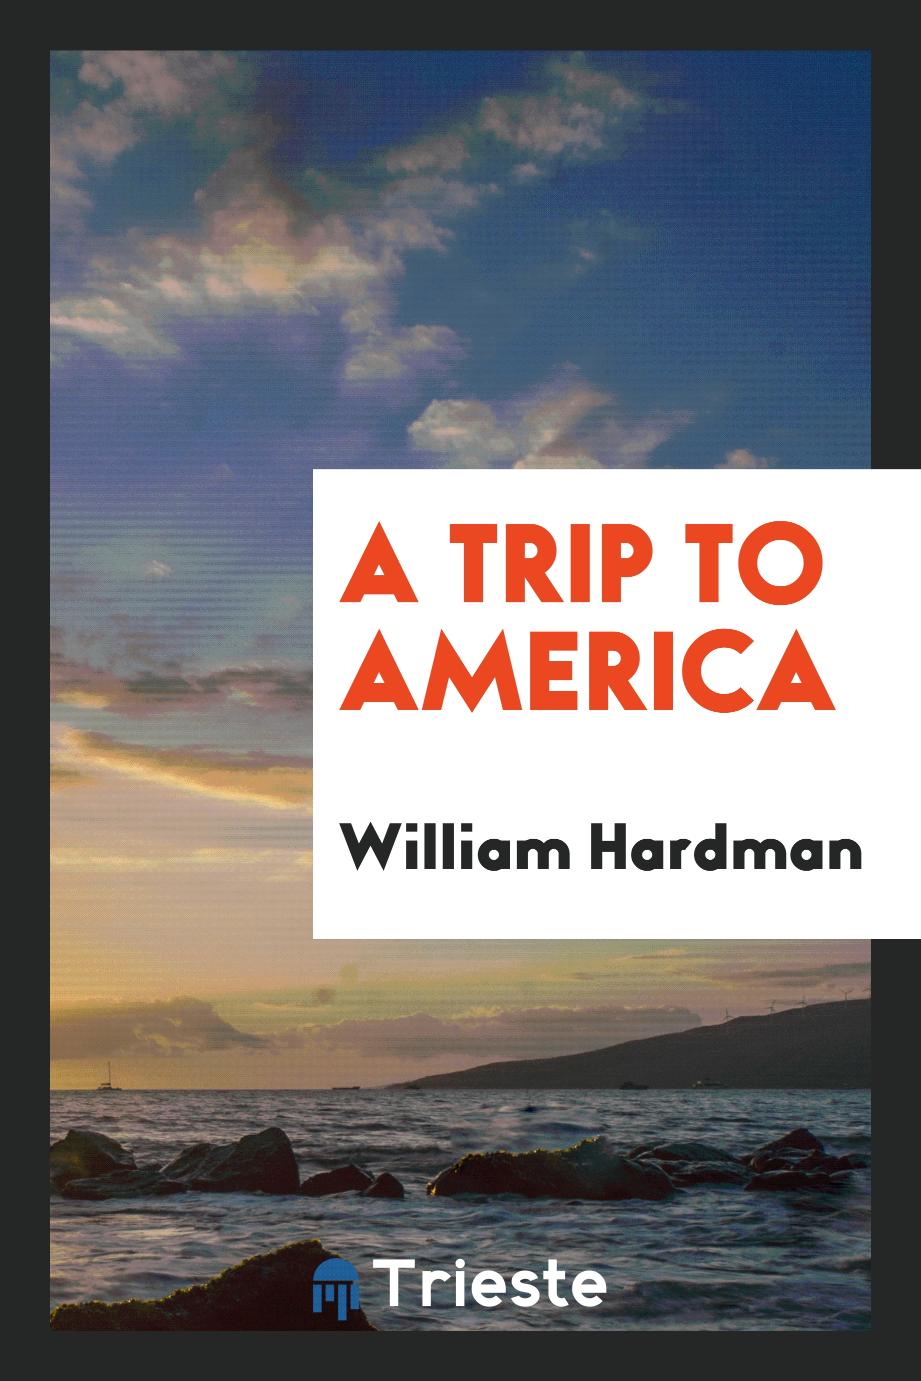 A trip to America